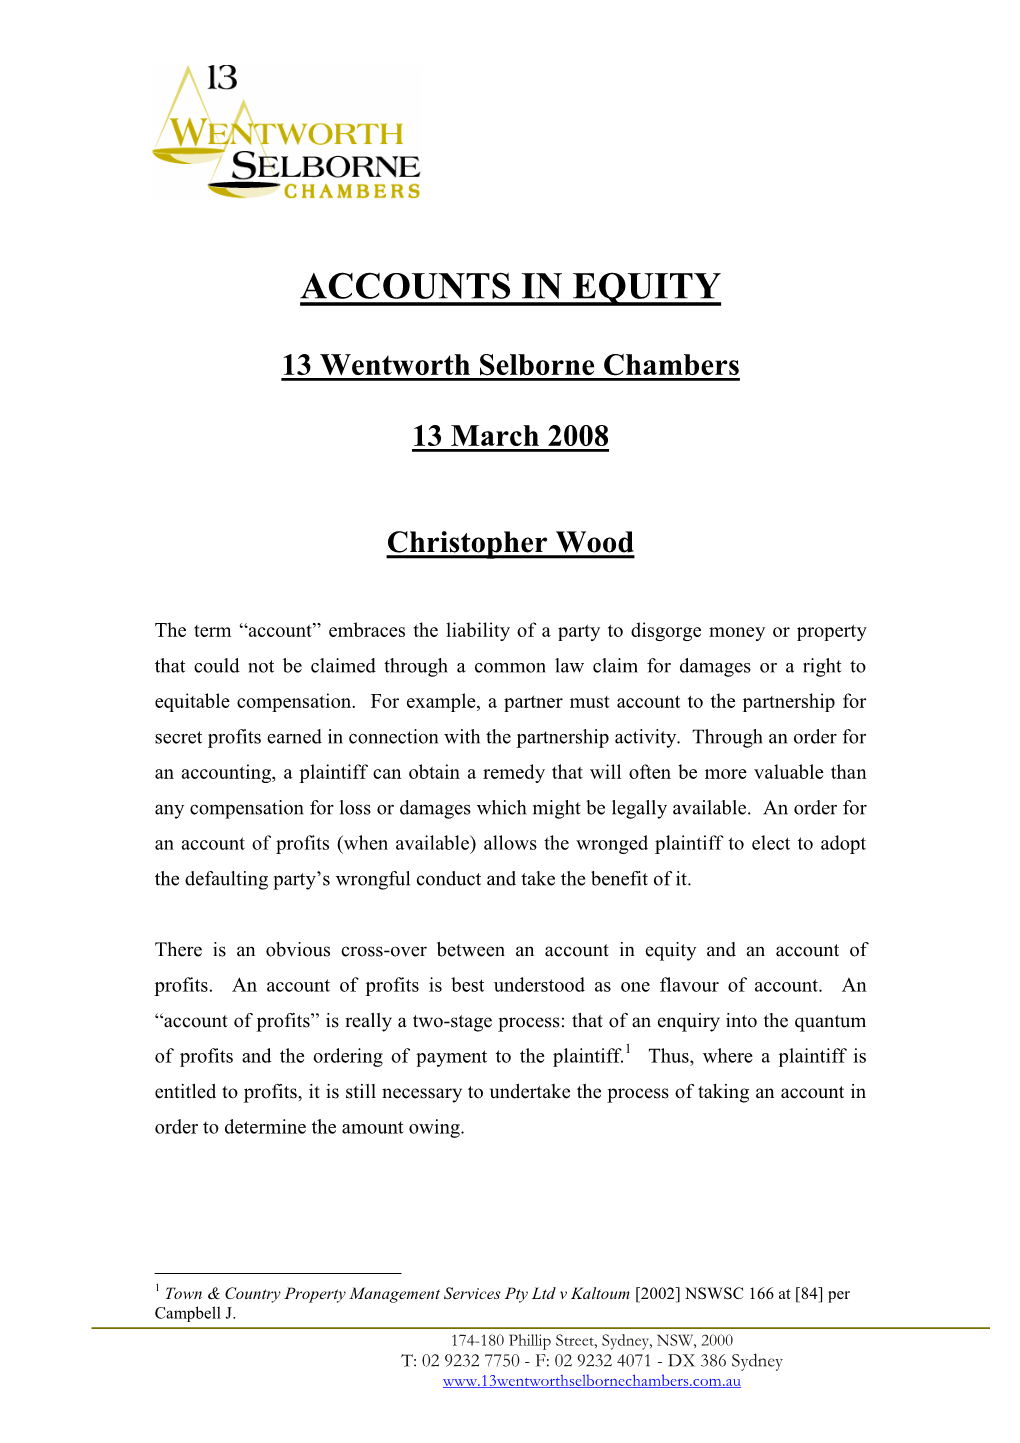 Accounts in Equity